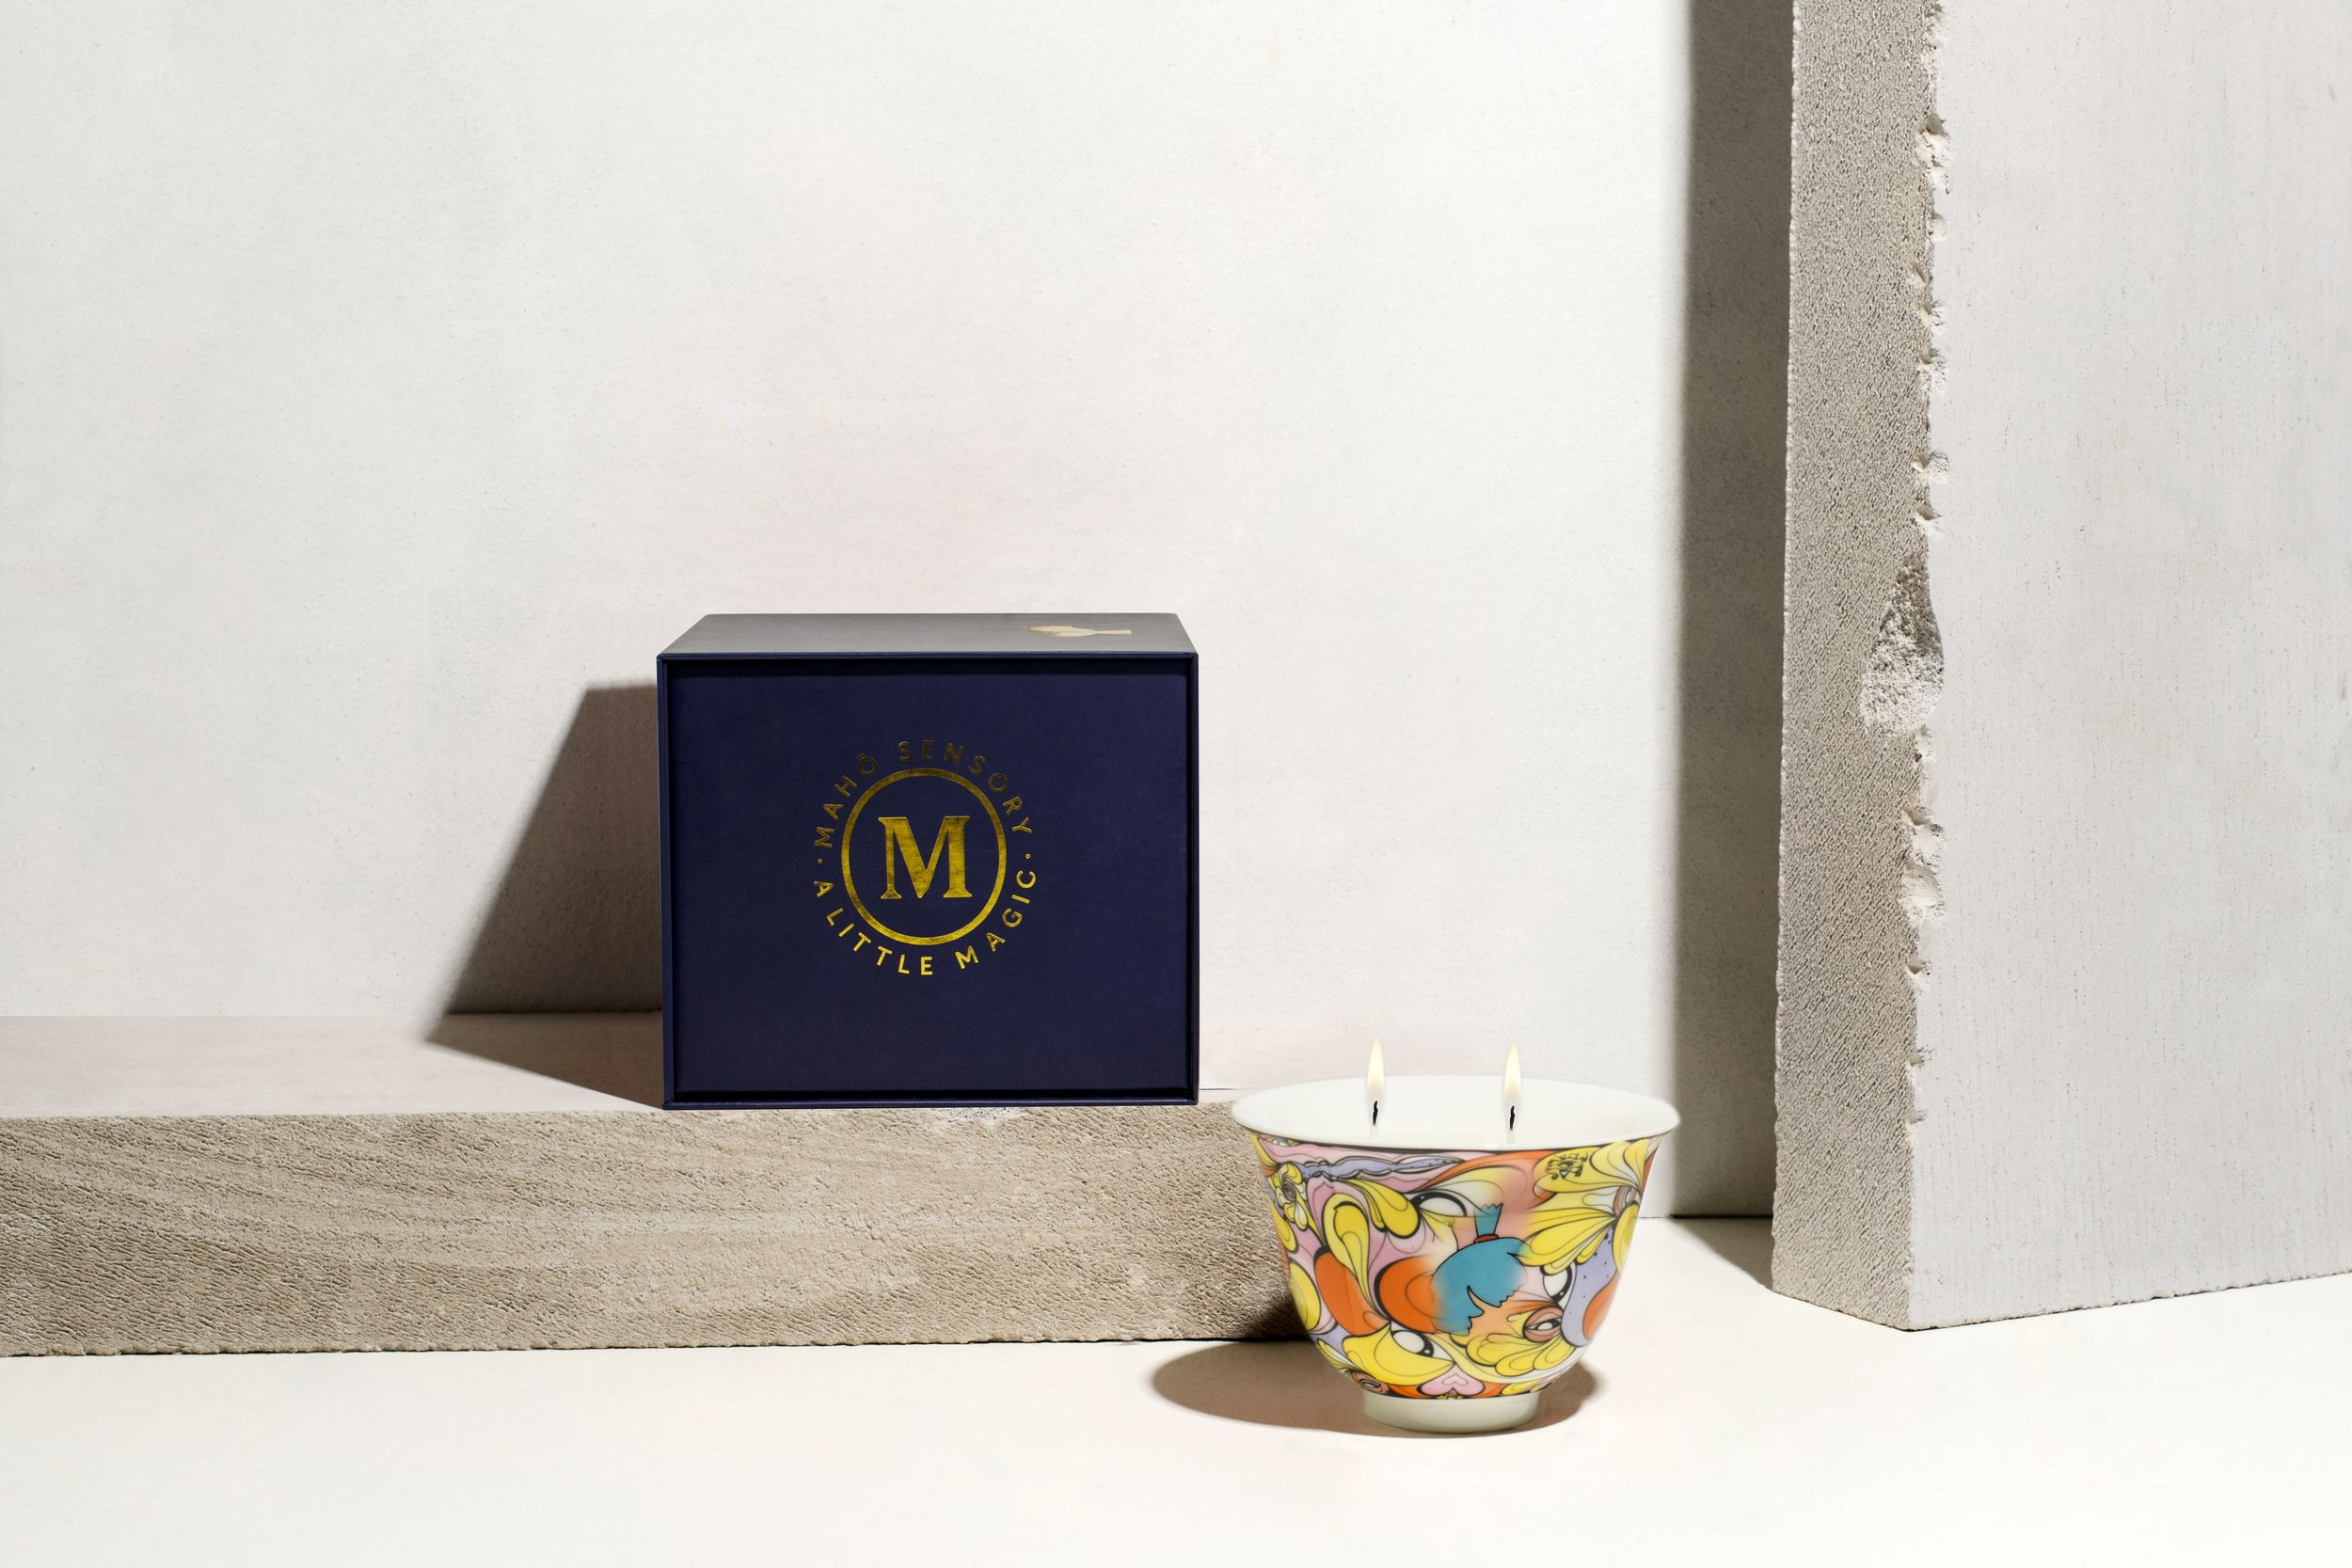 MAHO-Candle-lit-with Box-Surreal-Flower-AdobeRGB-400dpi -4749x3196px.jpg